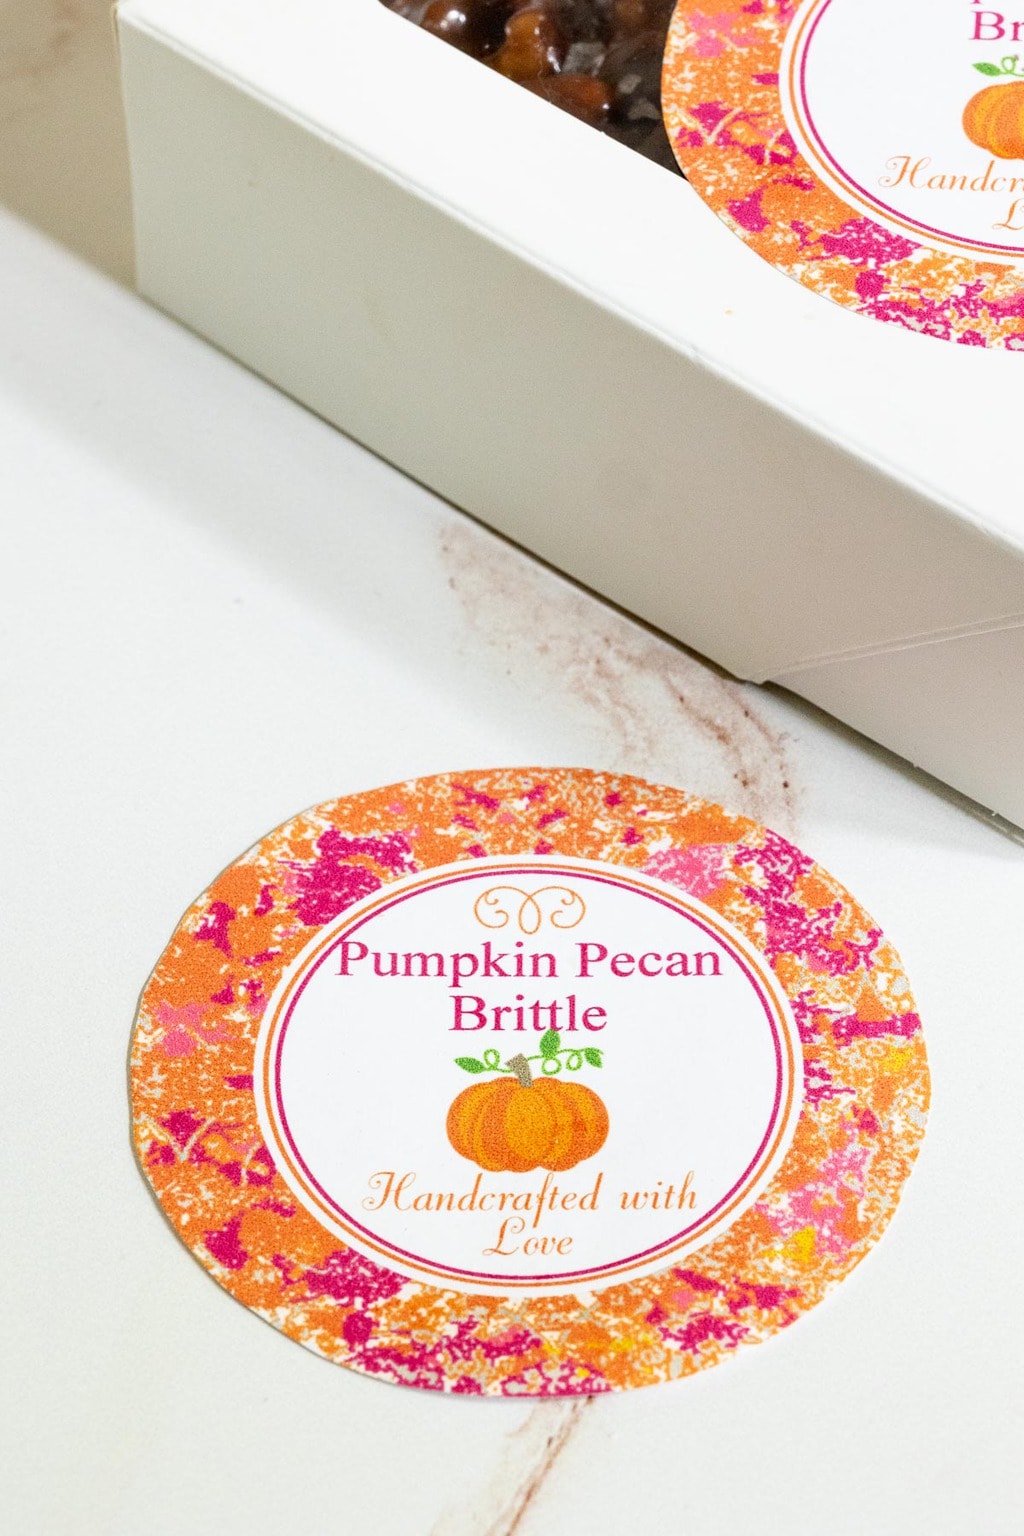 Vertical closeup photo of a Sea Salted Pumpkin Pecan Brittle custom gift label.